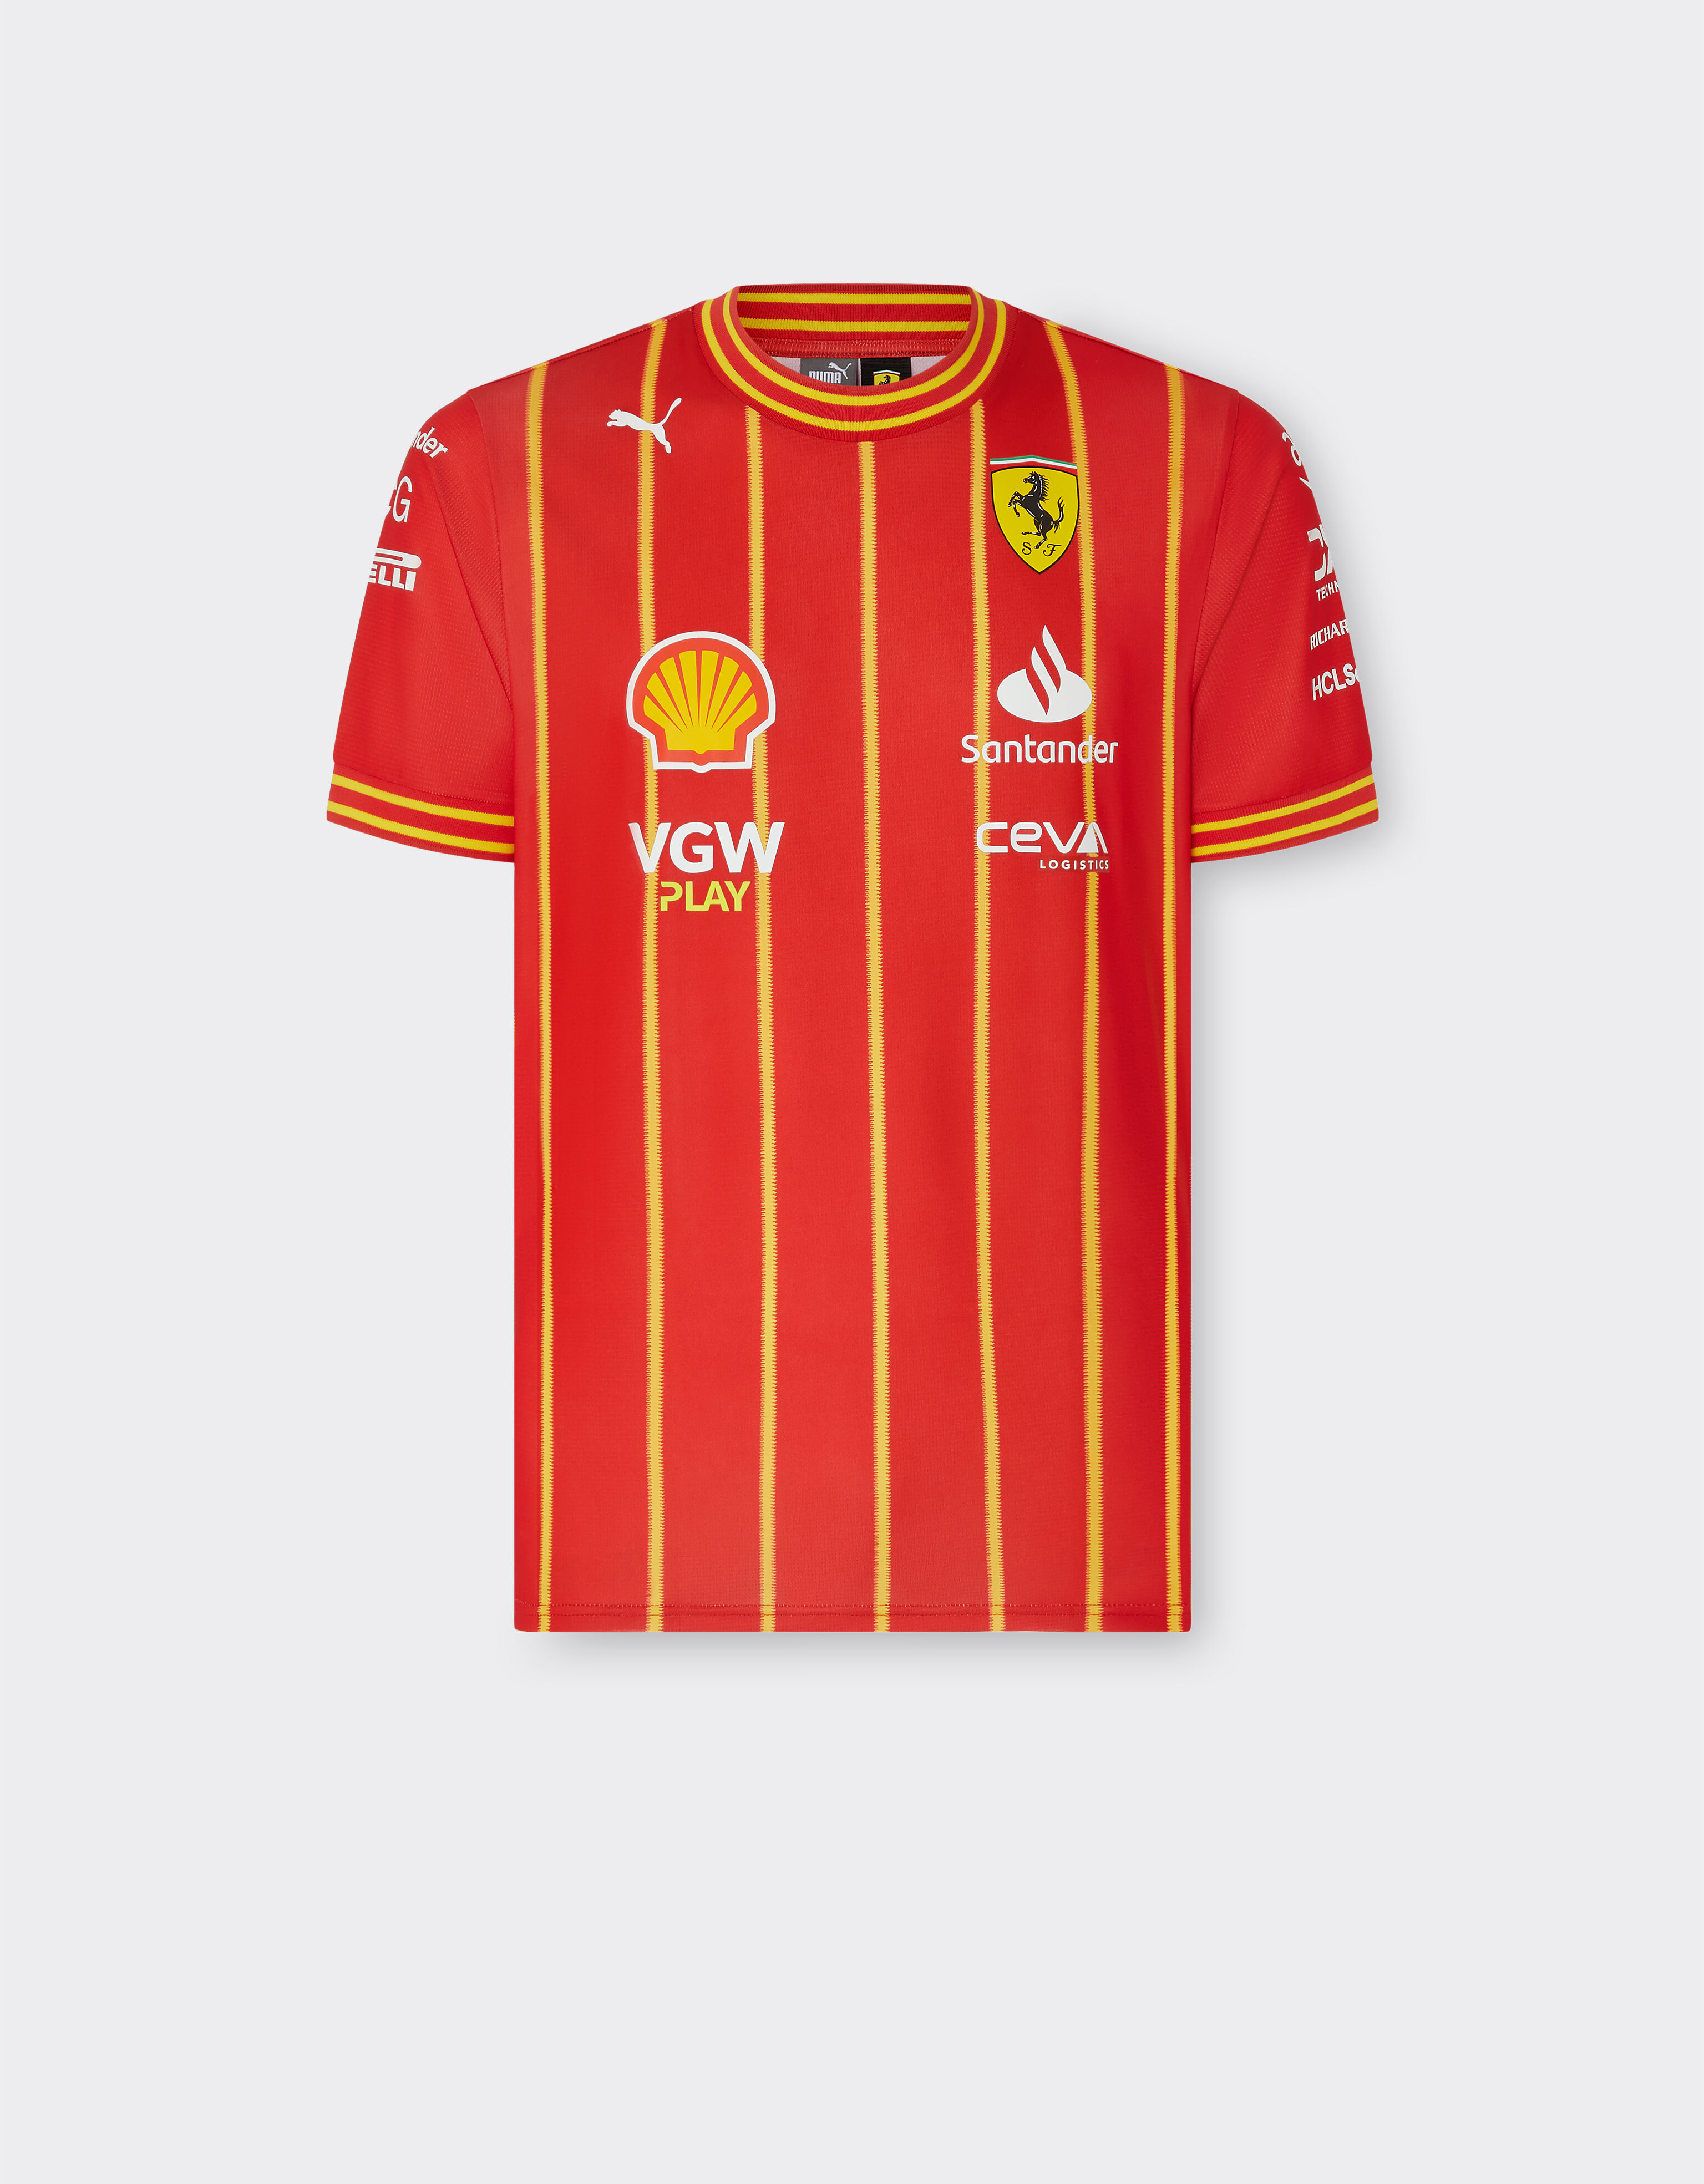 ${brand} Sainz Puma Football Shirt for Scuderia Ferrari - Austrian Special Edition ${colorDescription} ${masterID}